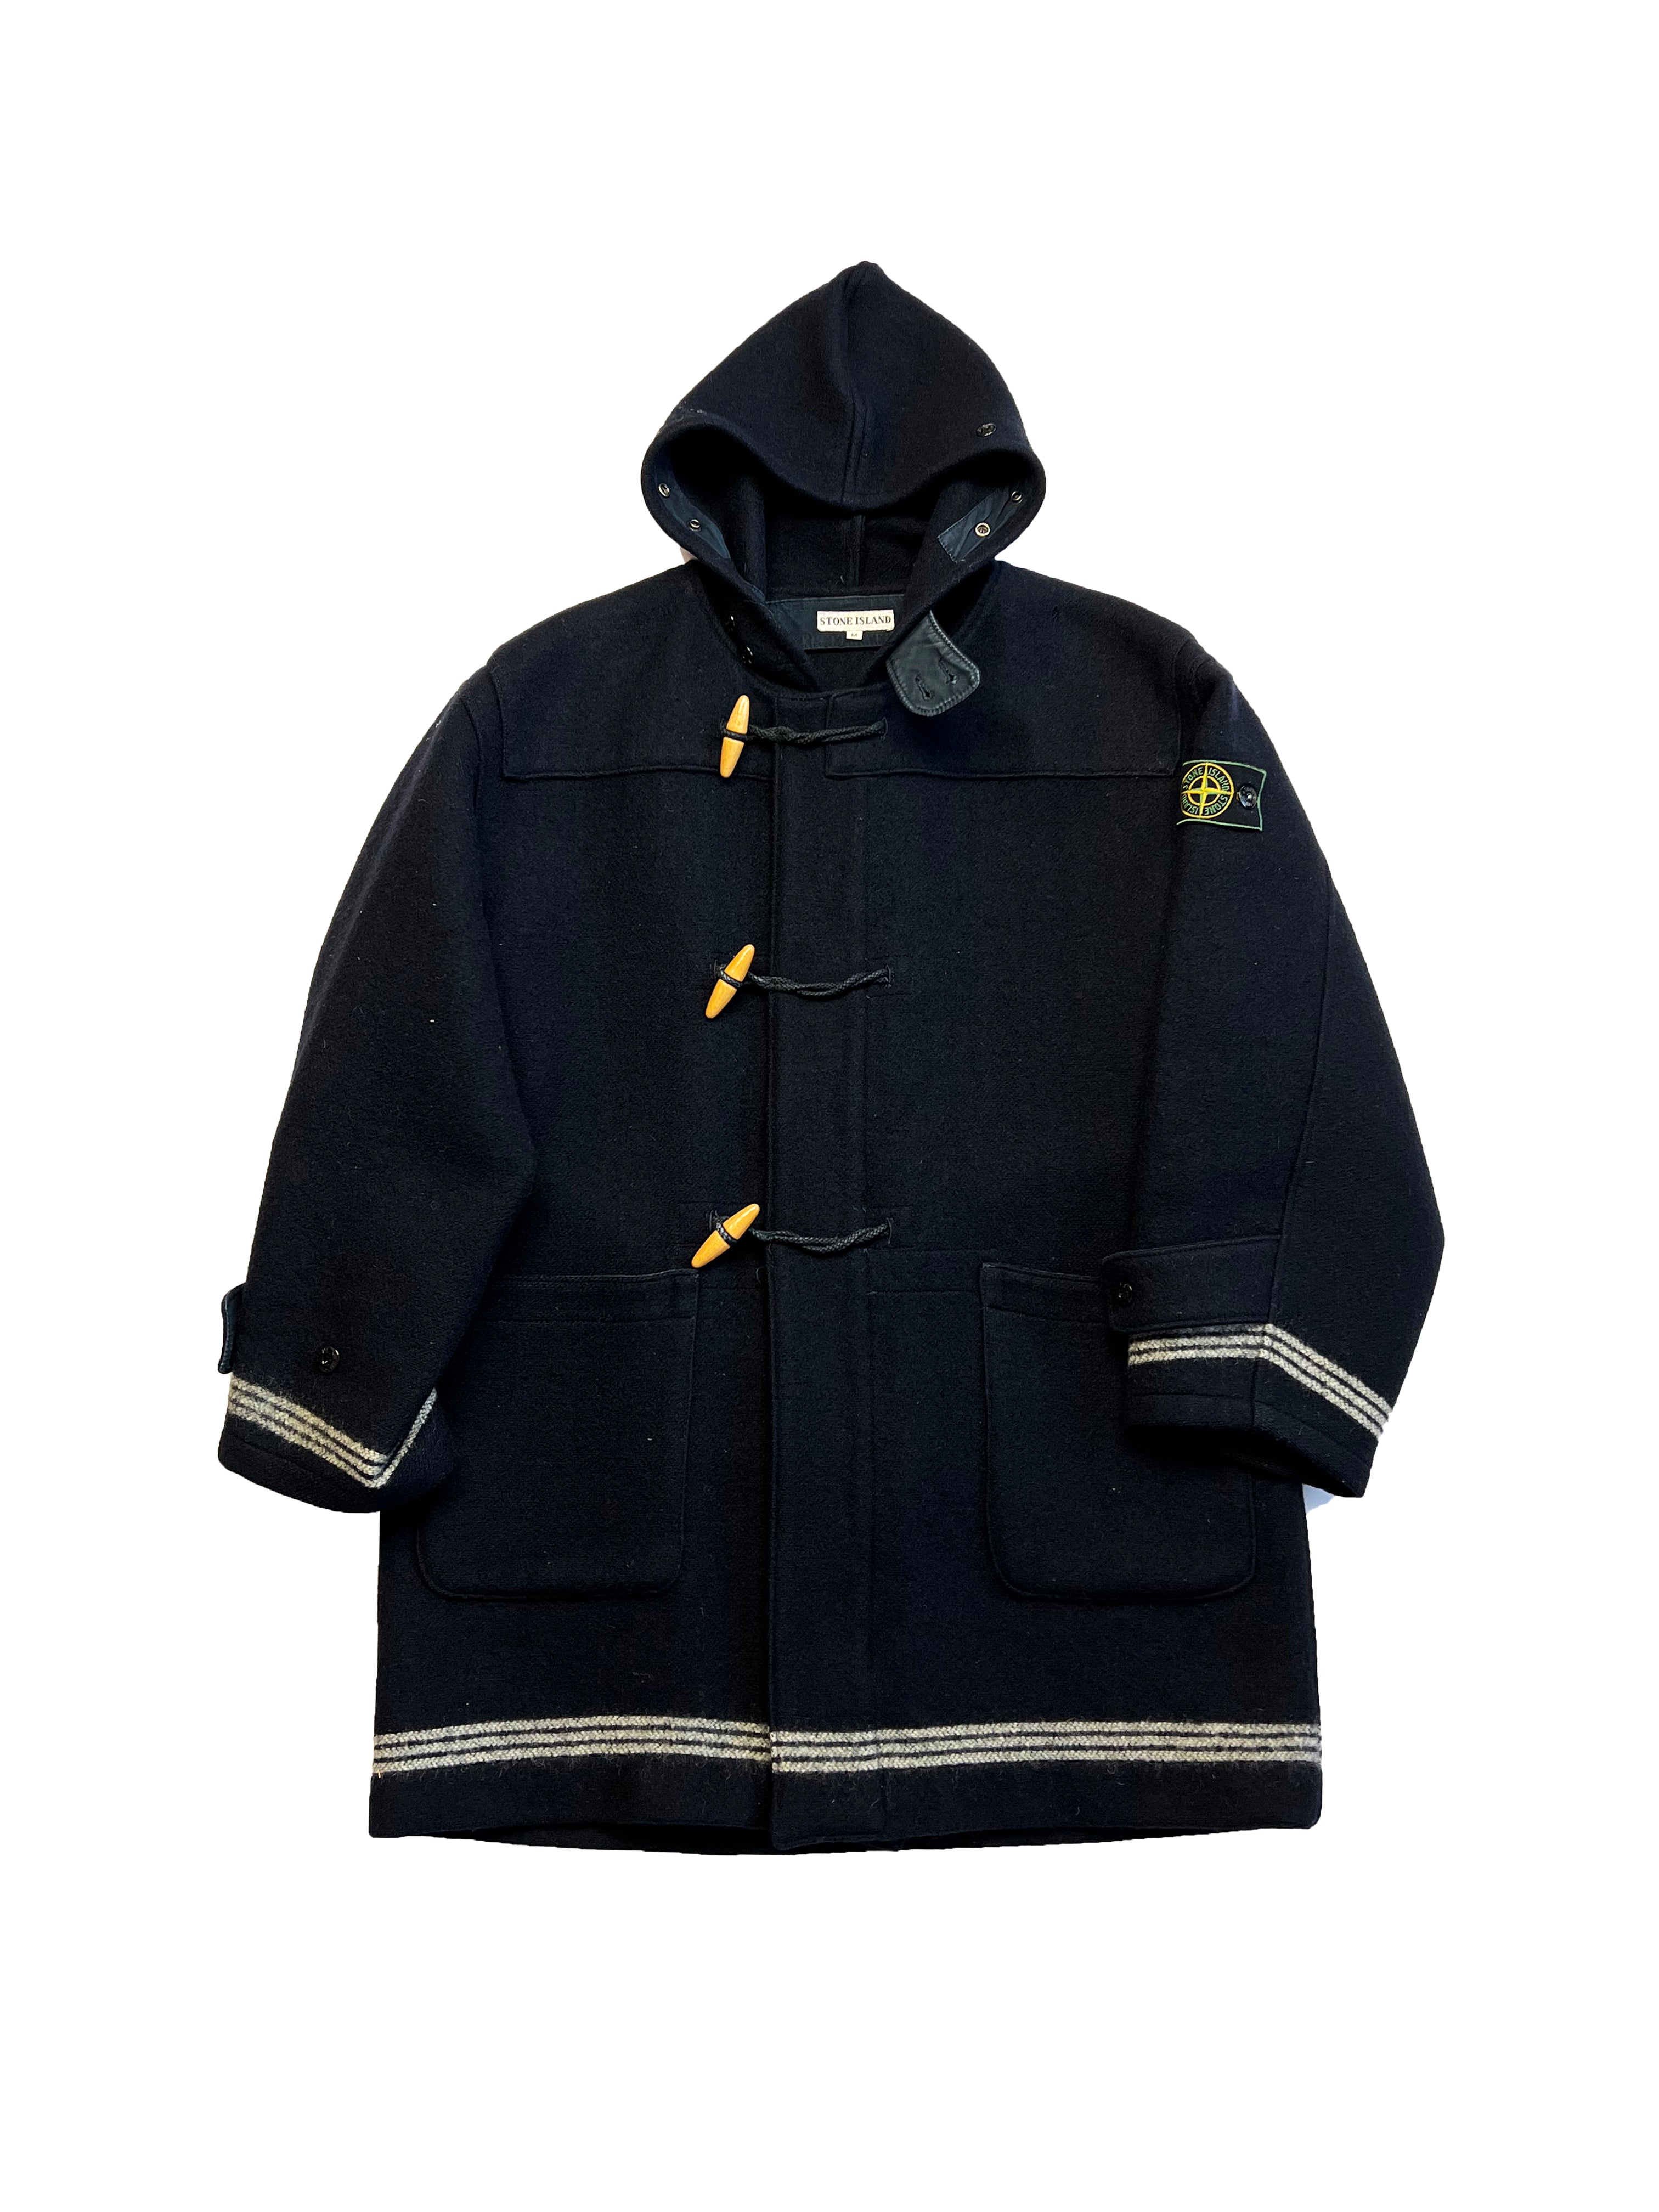 Stone island Jacket Wool Duffle 1990